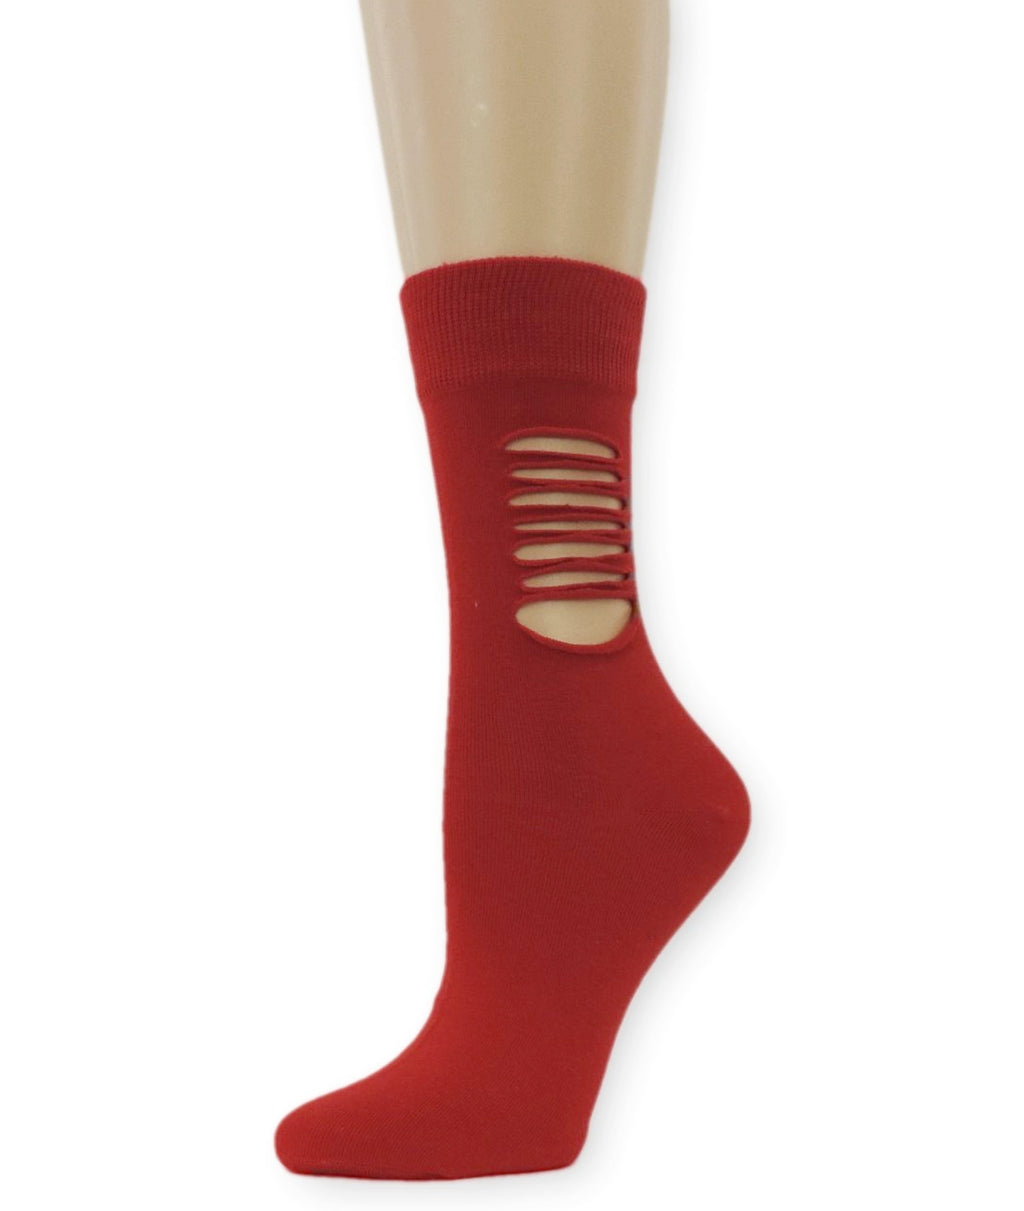 Ripped Bright Red Cotton Socks - Global Trendz Fashion®